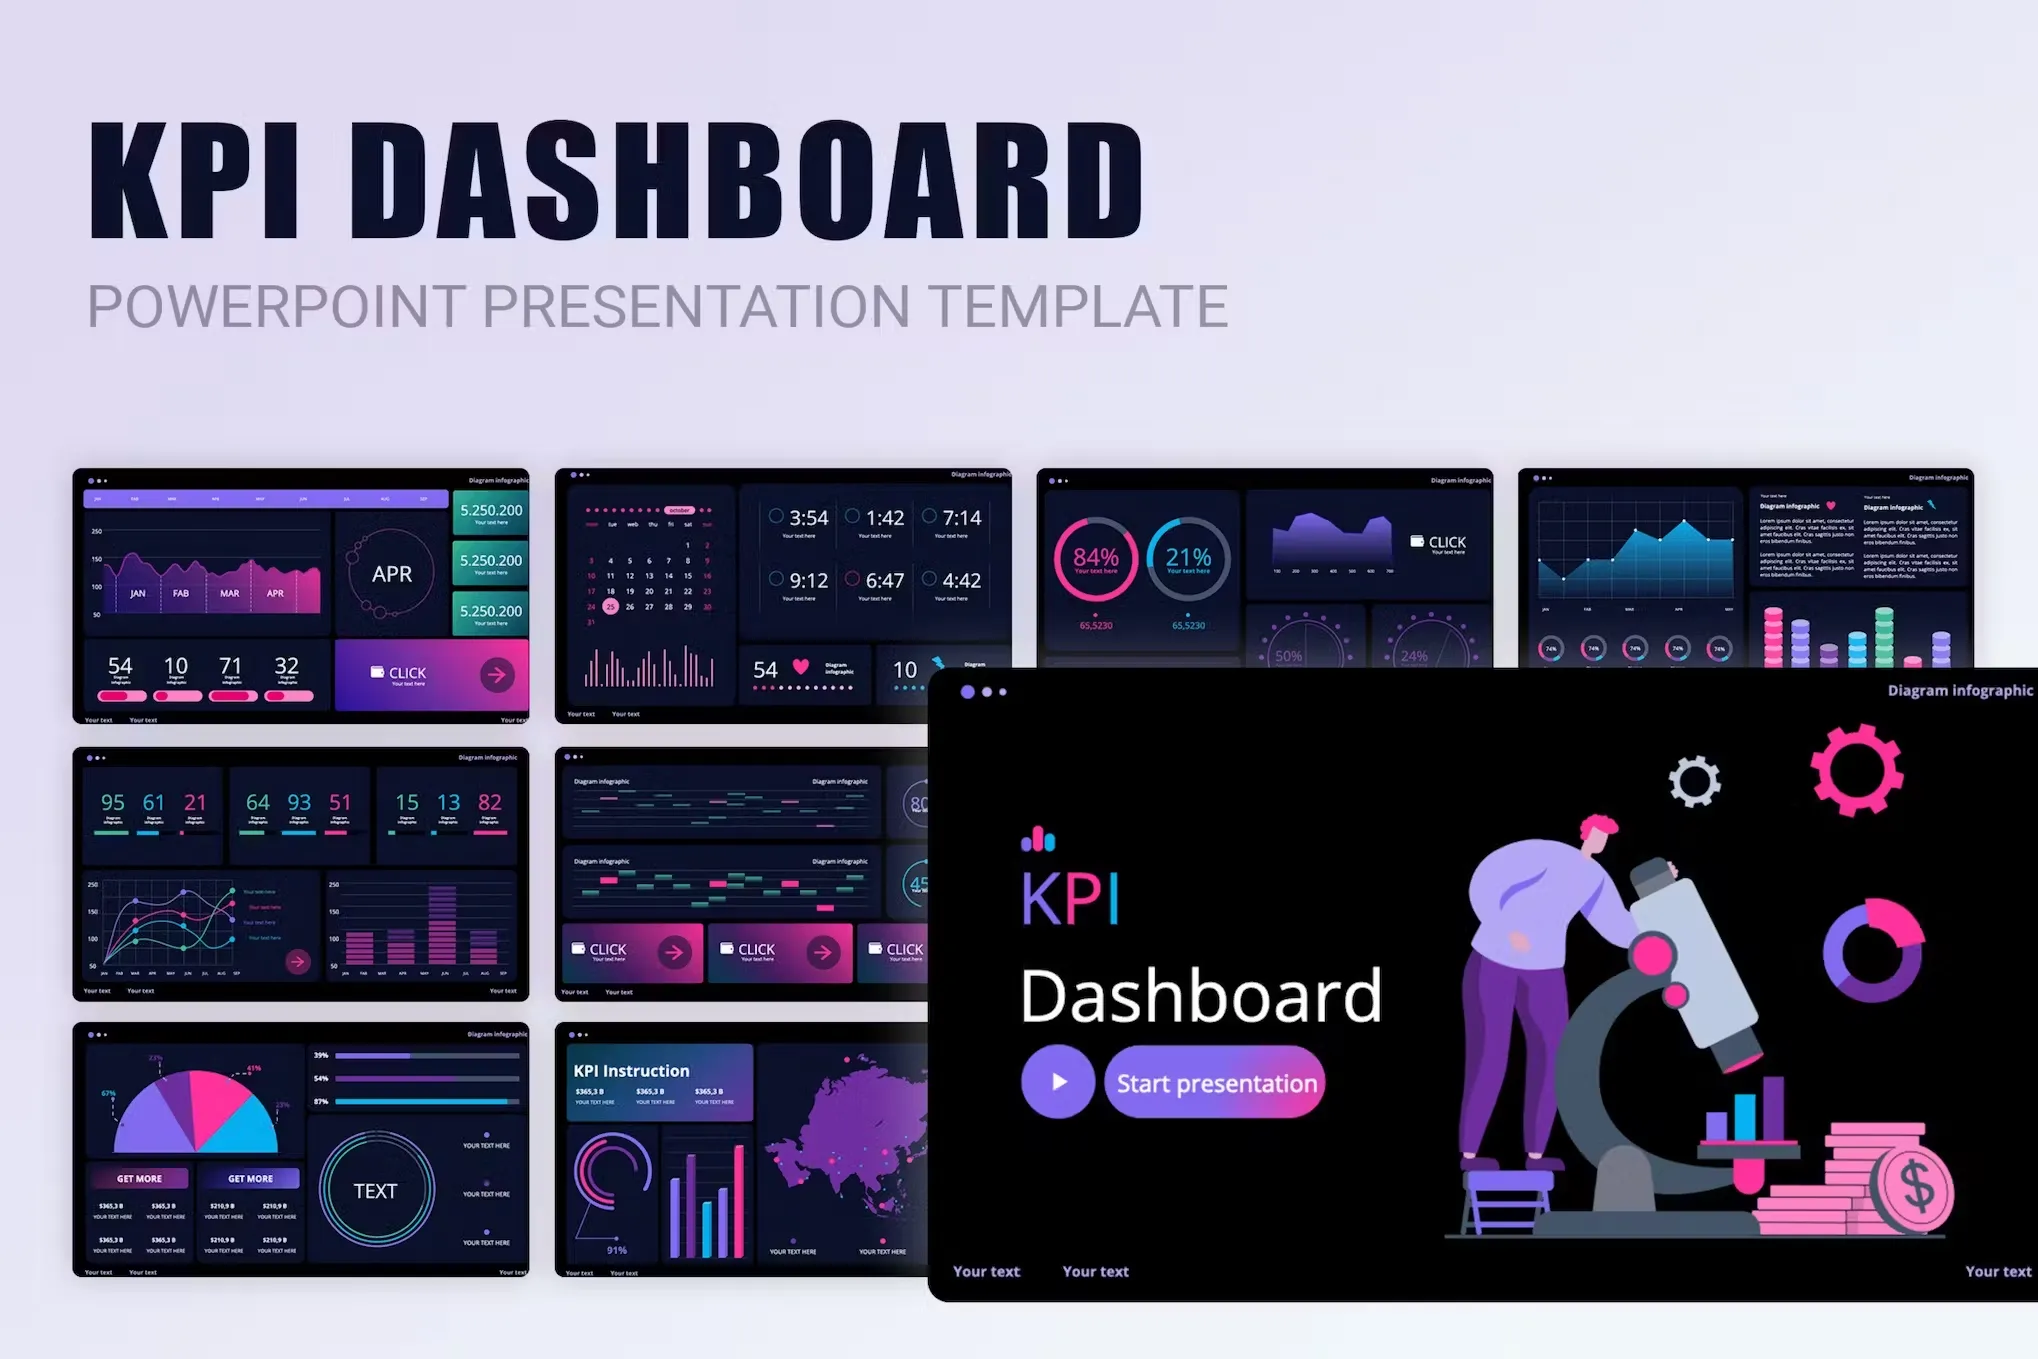 KPI Dashboard PowerPoint Template